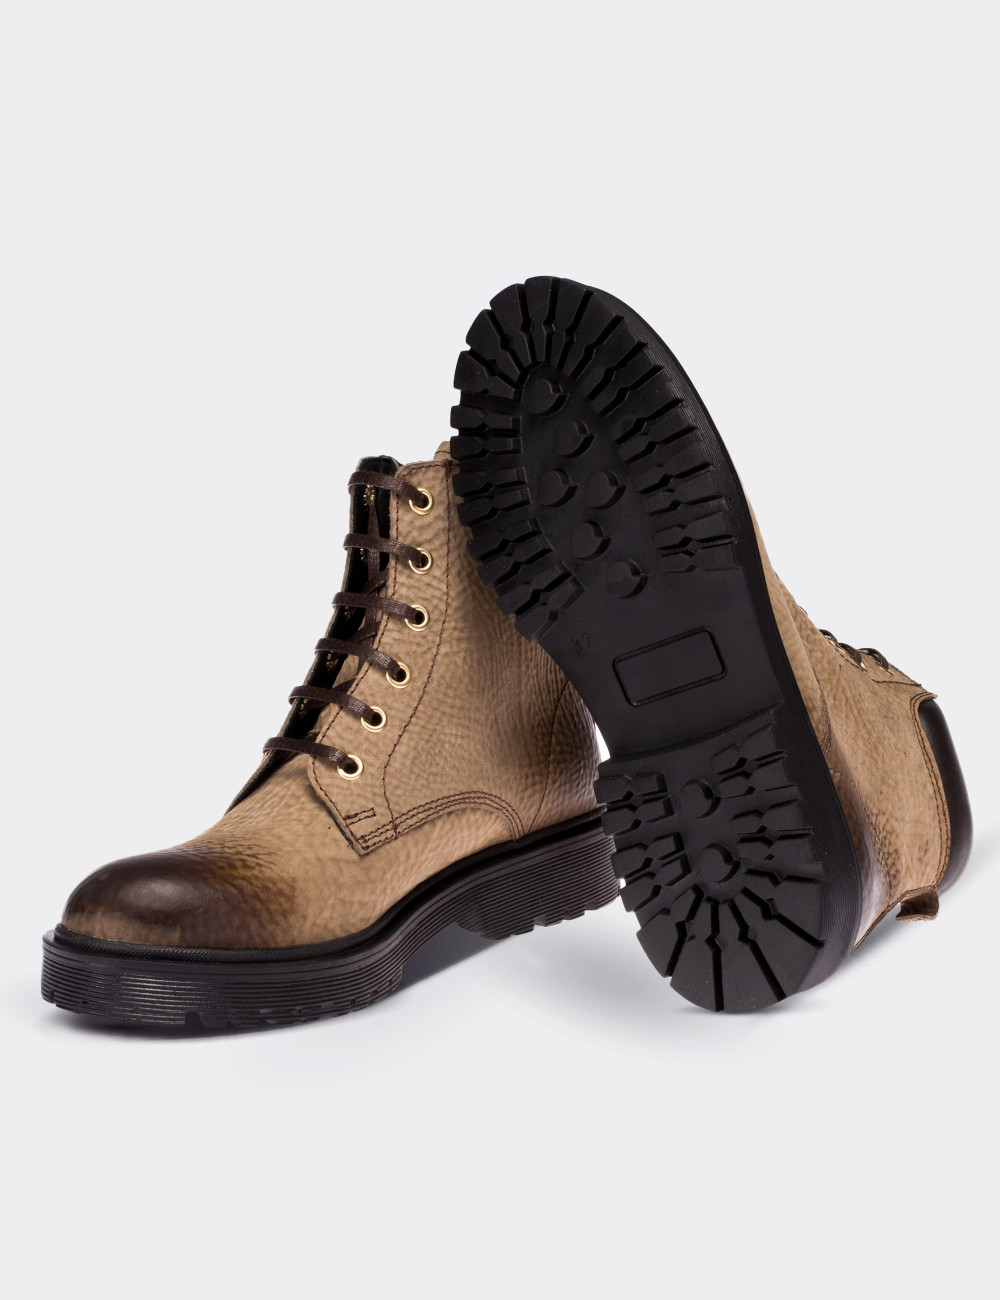 Tan Nubuck Leather  Boots - 01808ZTBAC02